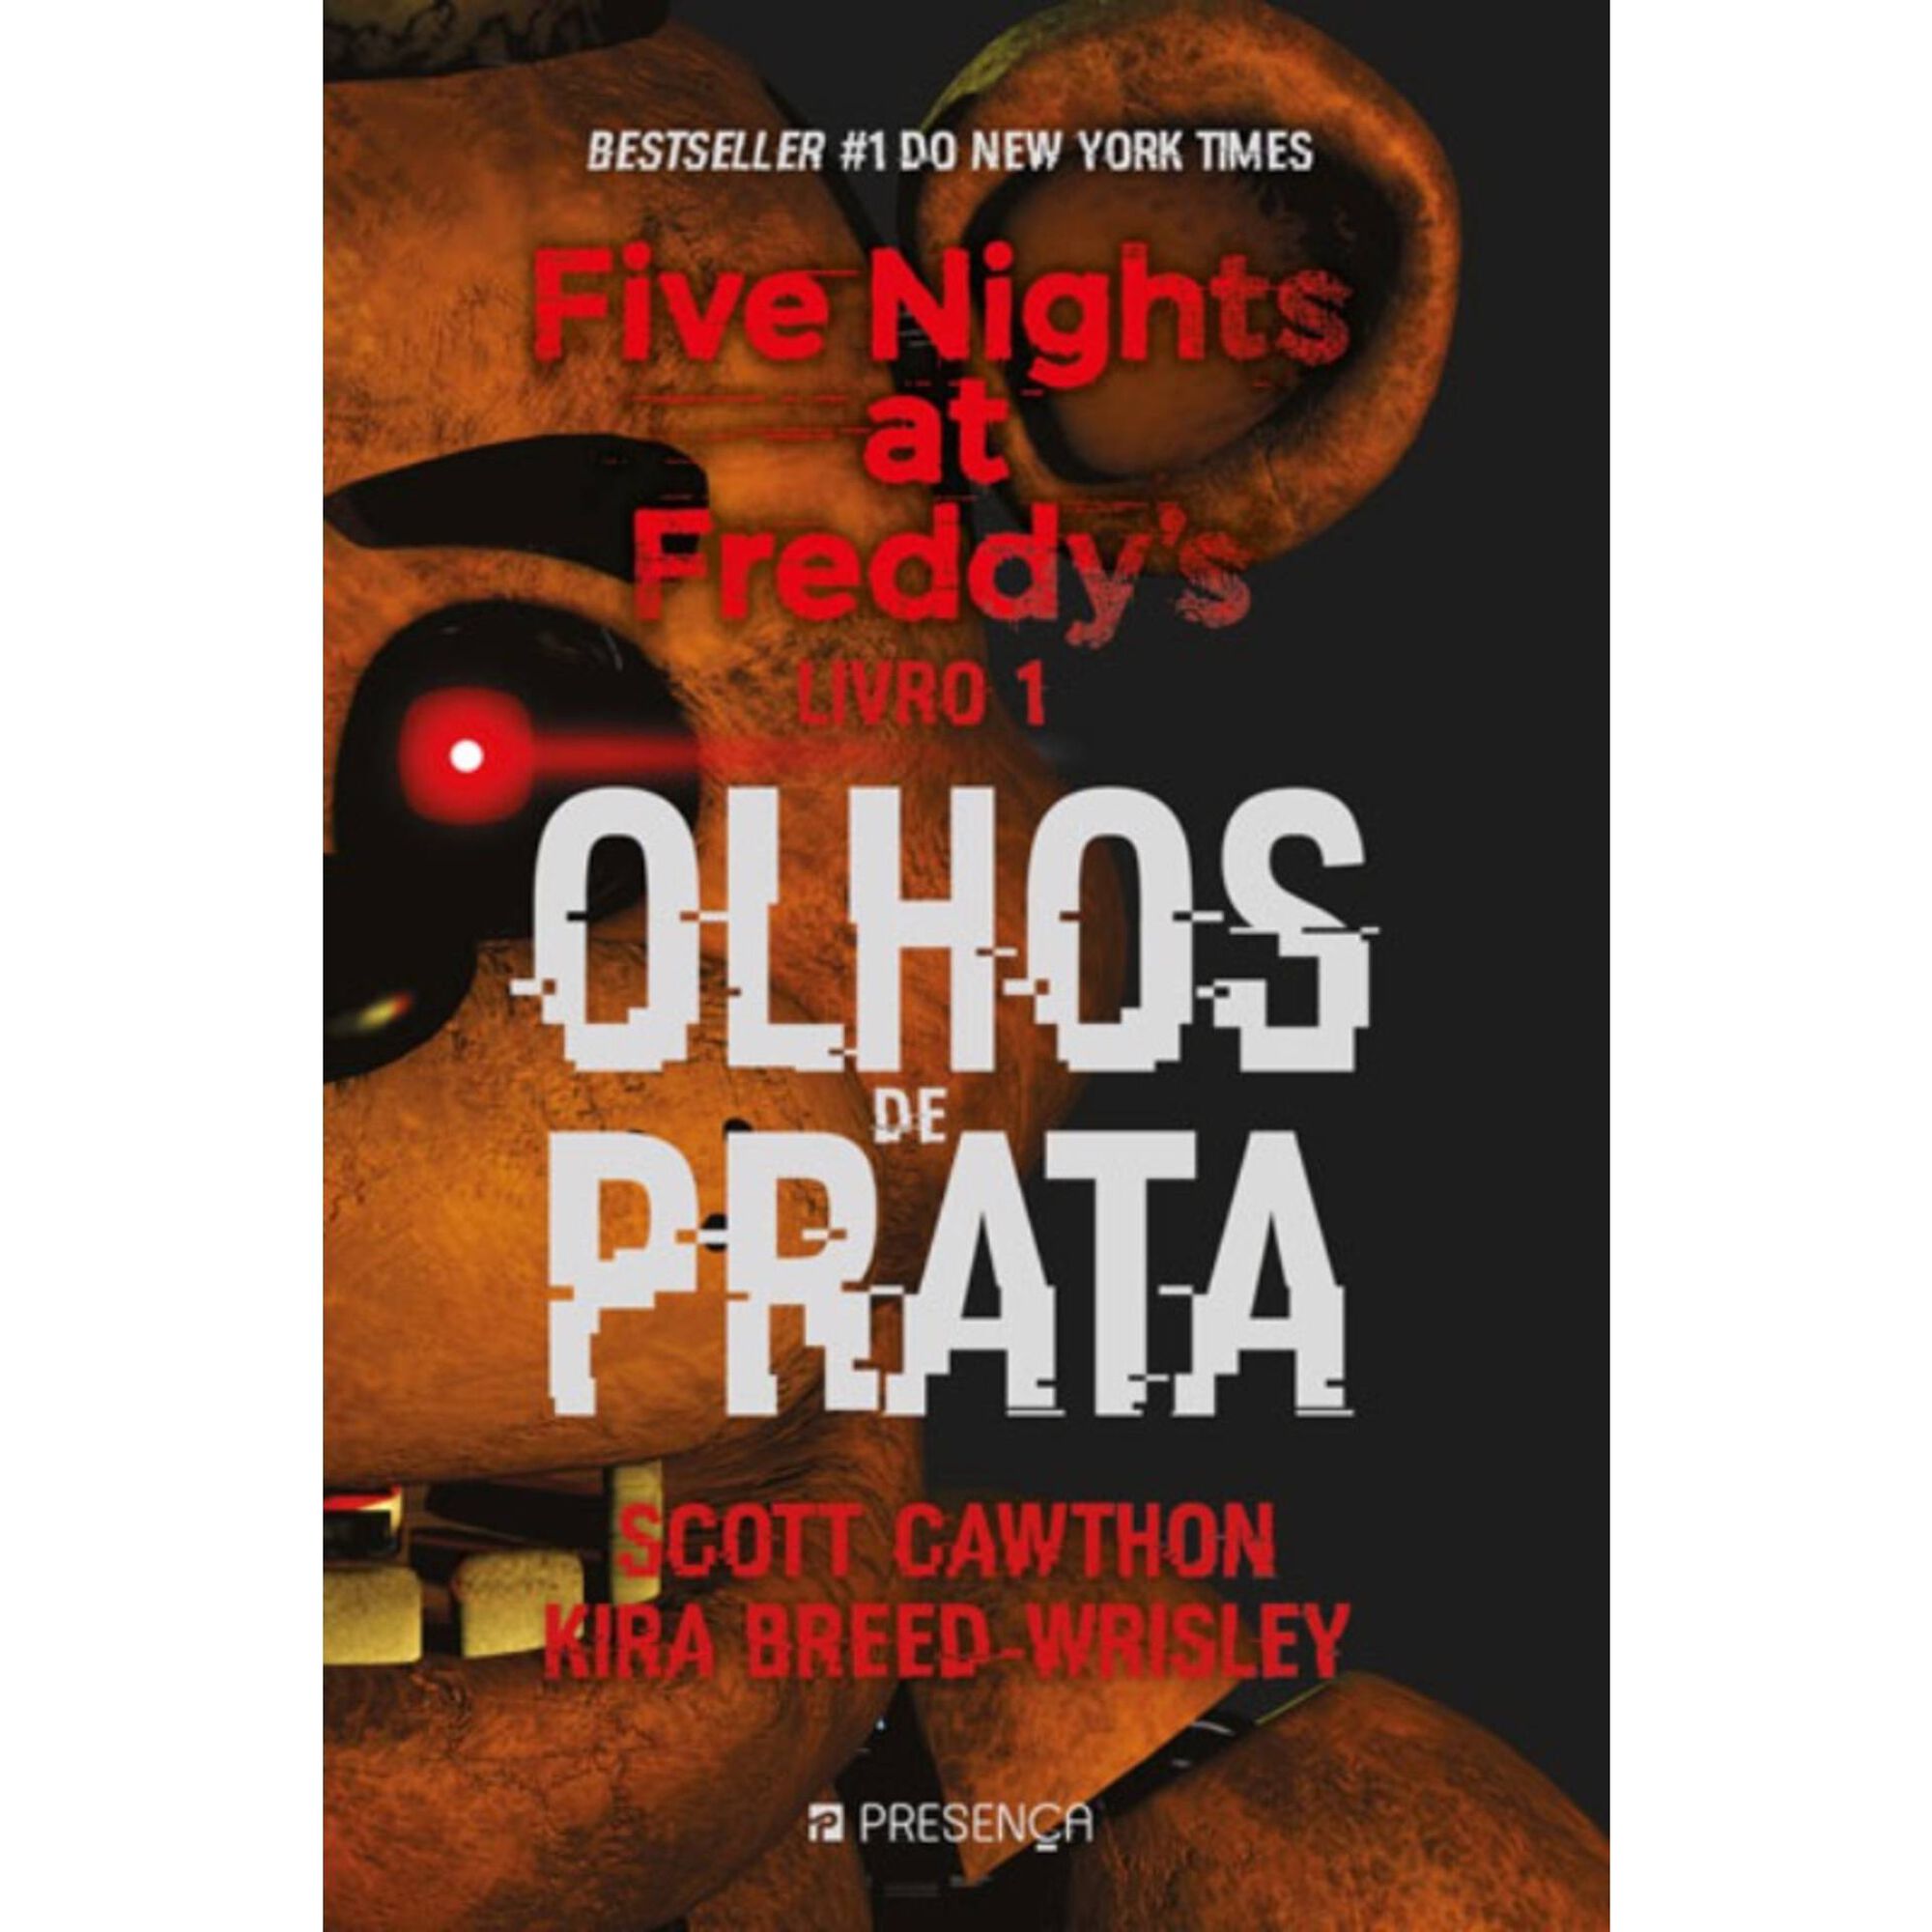 Five Nights at Freddy's 1 - Olhos de Prata